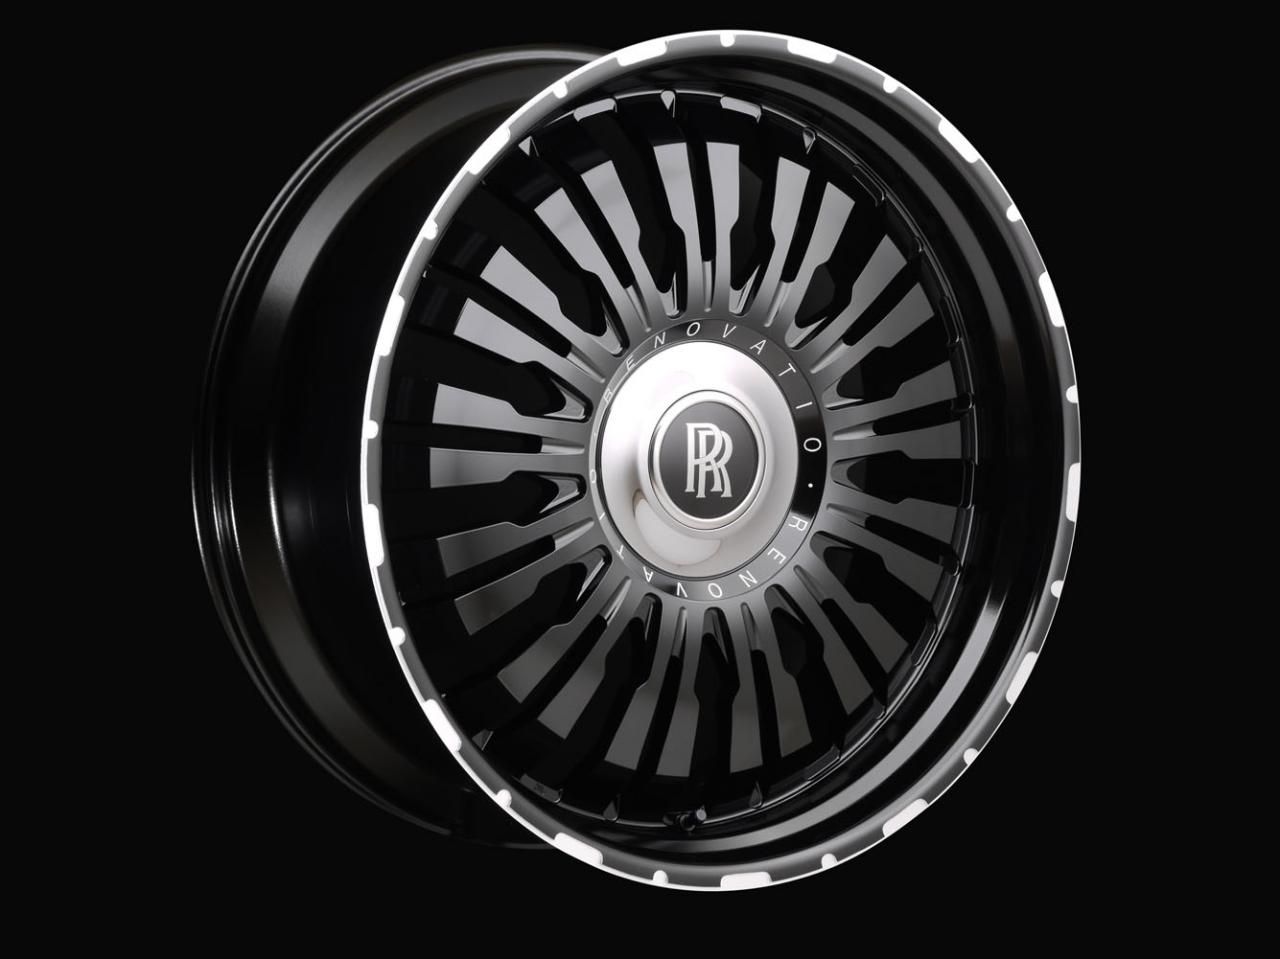 2011 Rolls-Royce Phantom Extend Wheelbase by Wald International